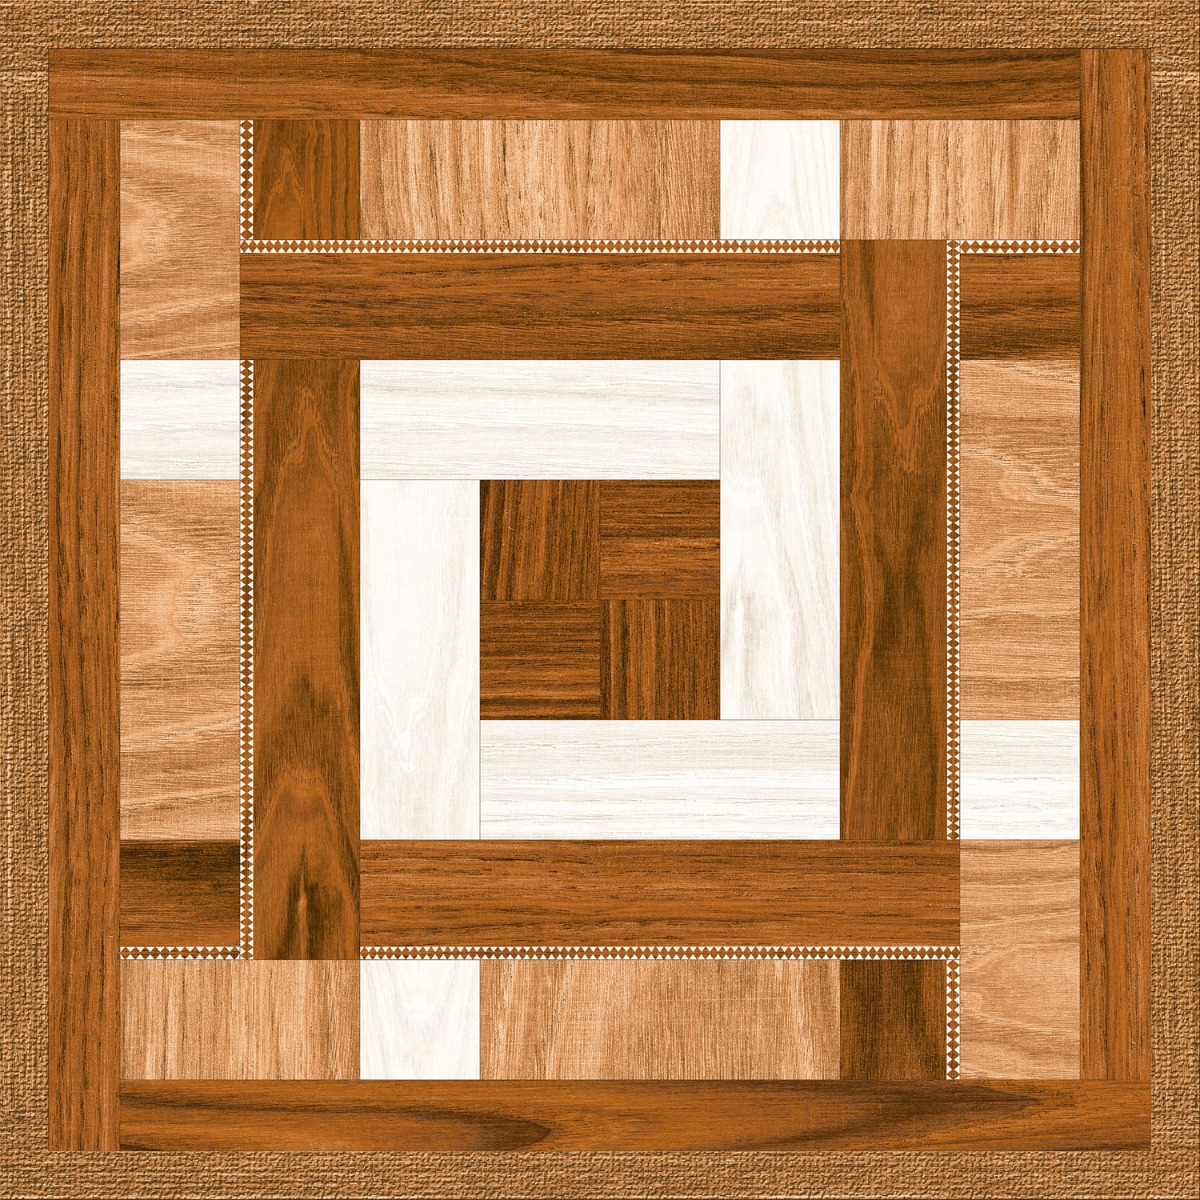 Wooden Tiles for Bathroom Tiles, Living Room Tiles, Bedroom Tiles, Accent Tiles, Hospital Tiles, High Traffic Tiles, Bar/Restaurant, Commercial/Office, Outdoor Area